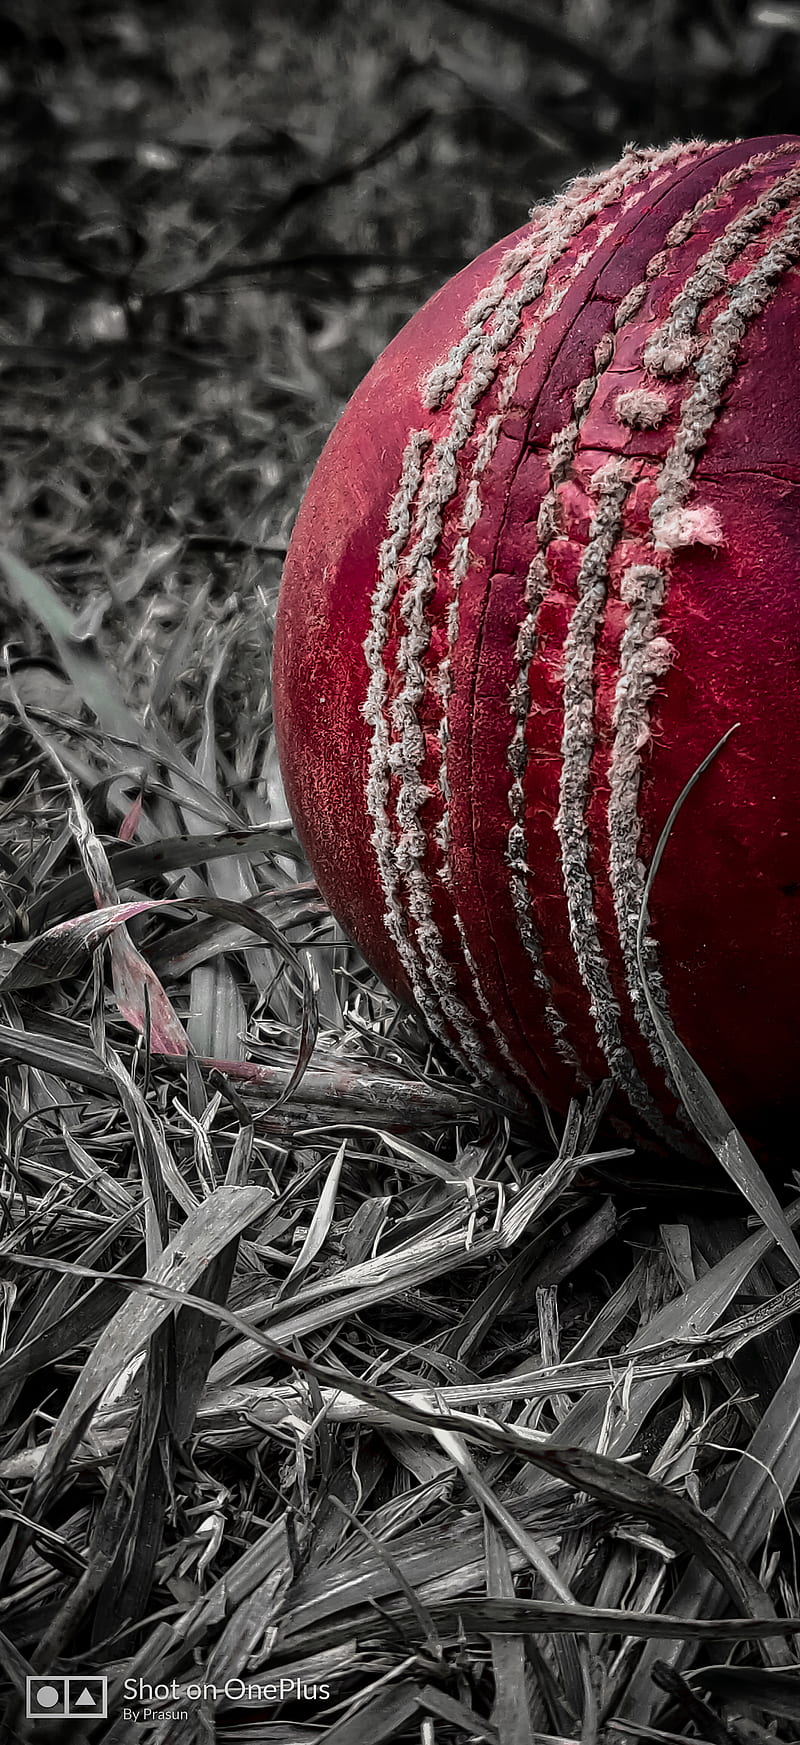 Best Cricket iPhone HD Wallpapers - iLikeWallpaper